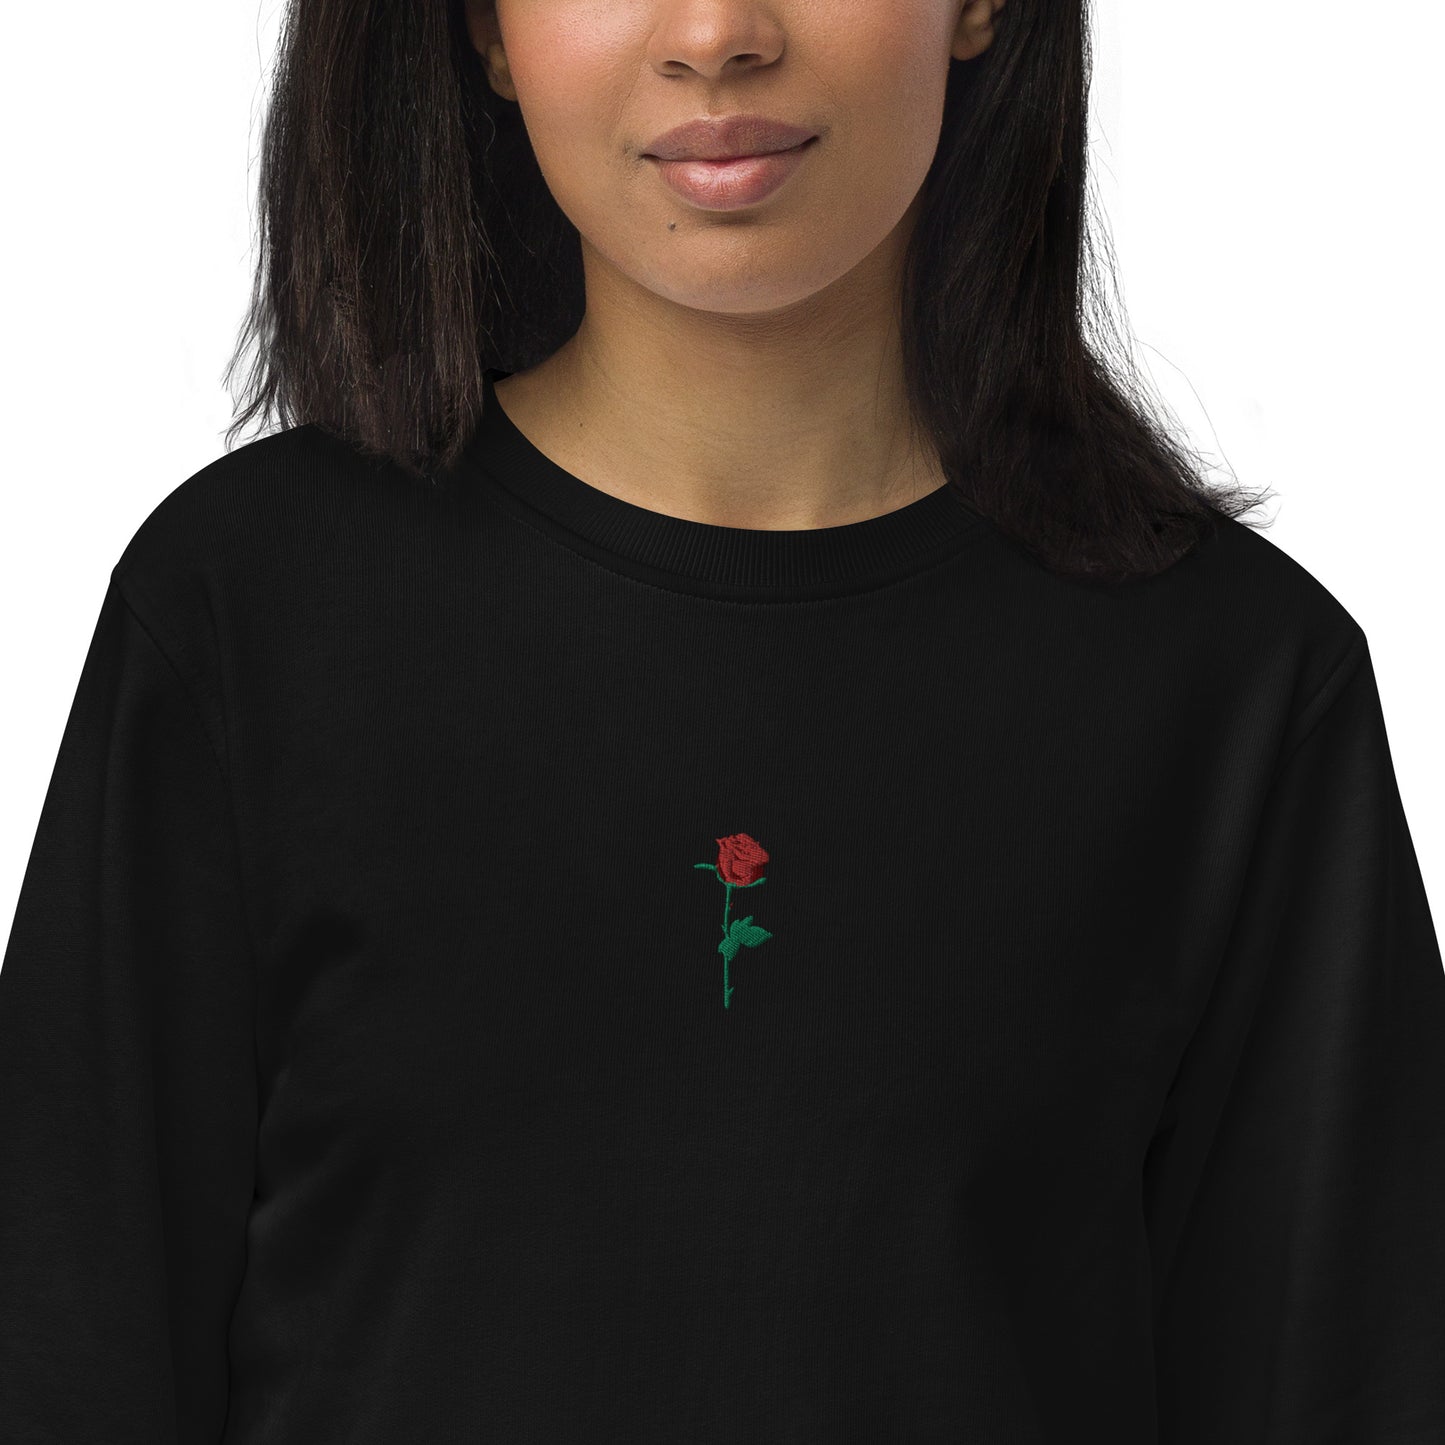 Adonis-Creations - Women's Organic Embroidered Cotton Sweatshirt